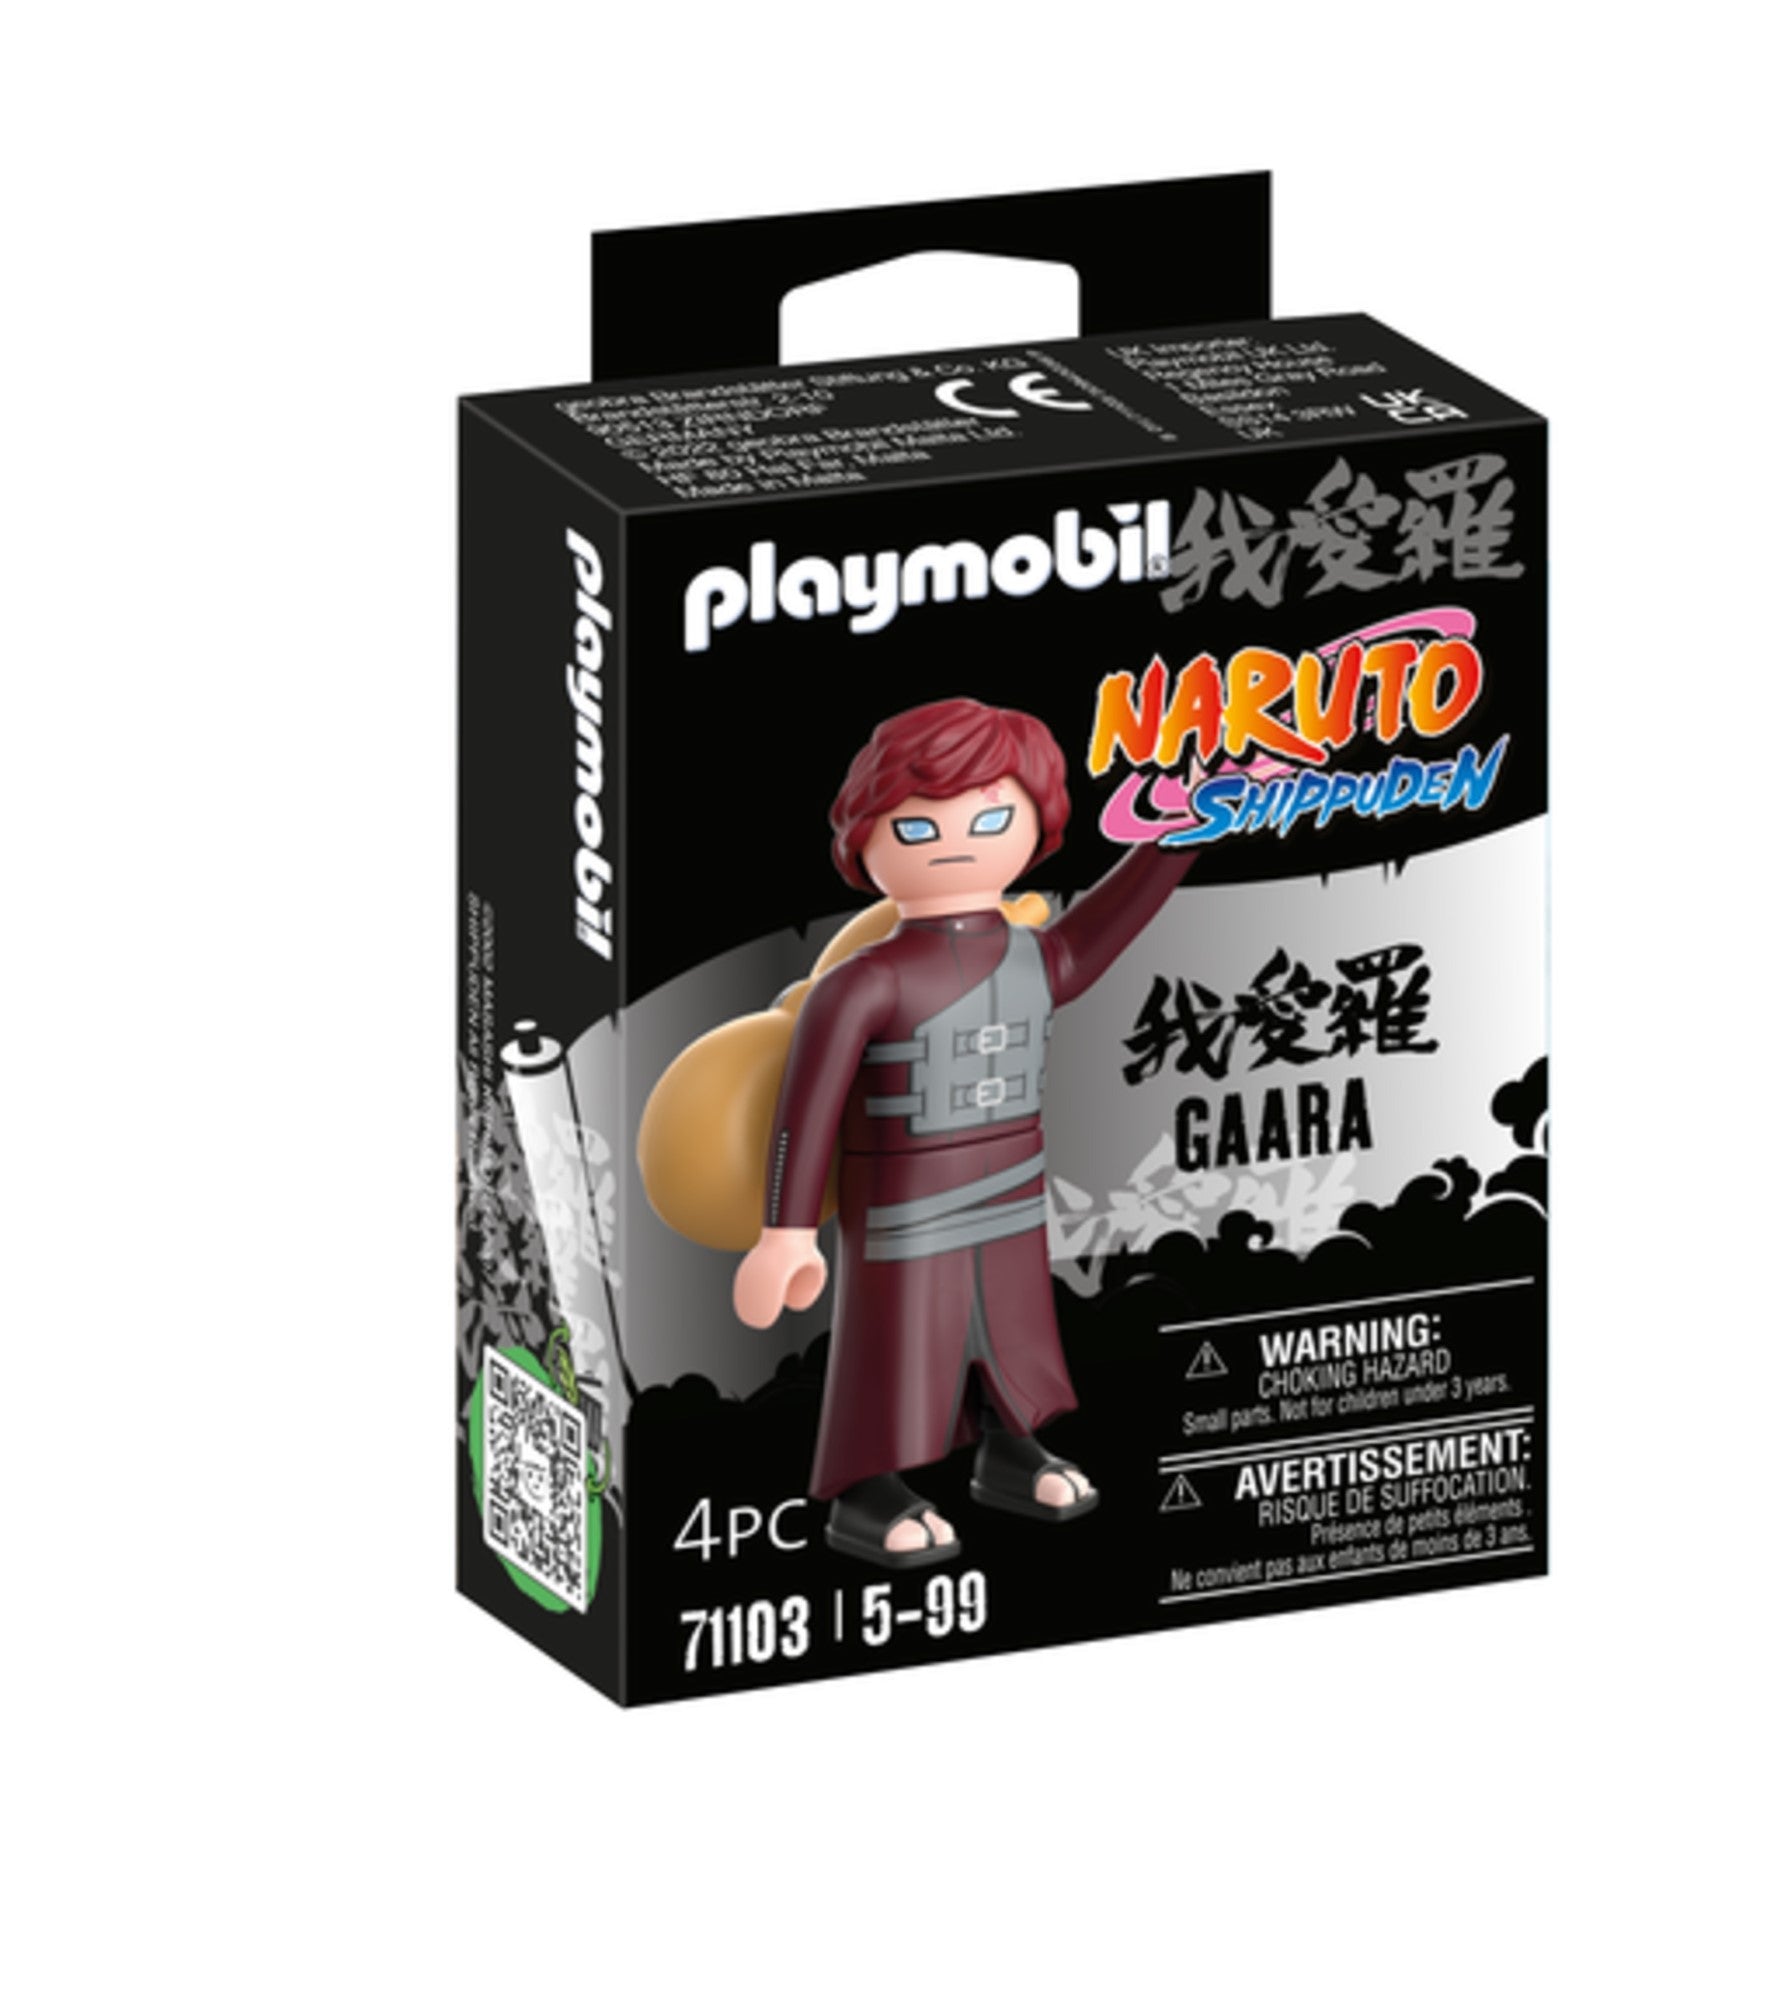 Playmobil, Naruto, Gaara